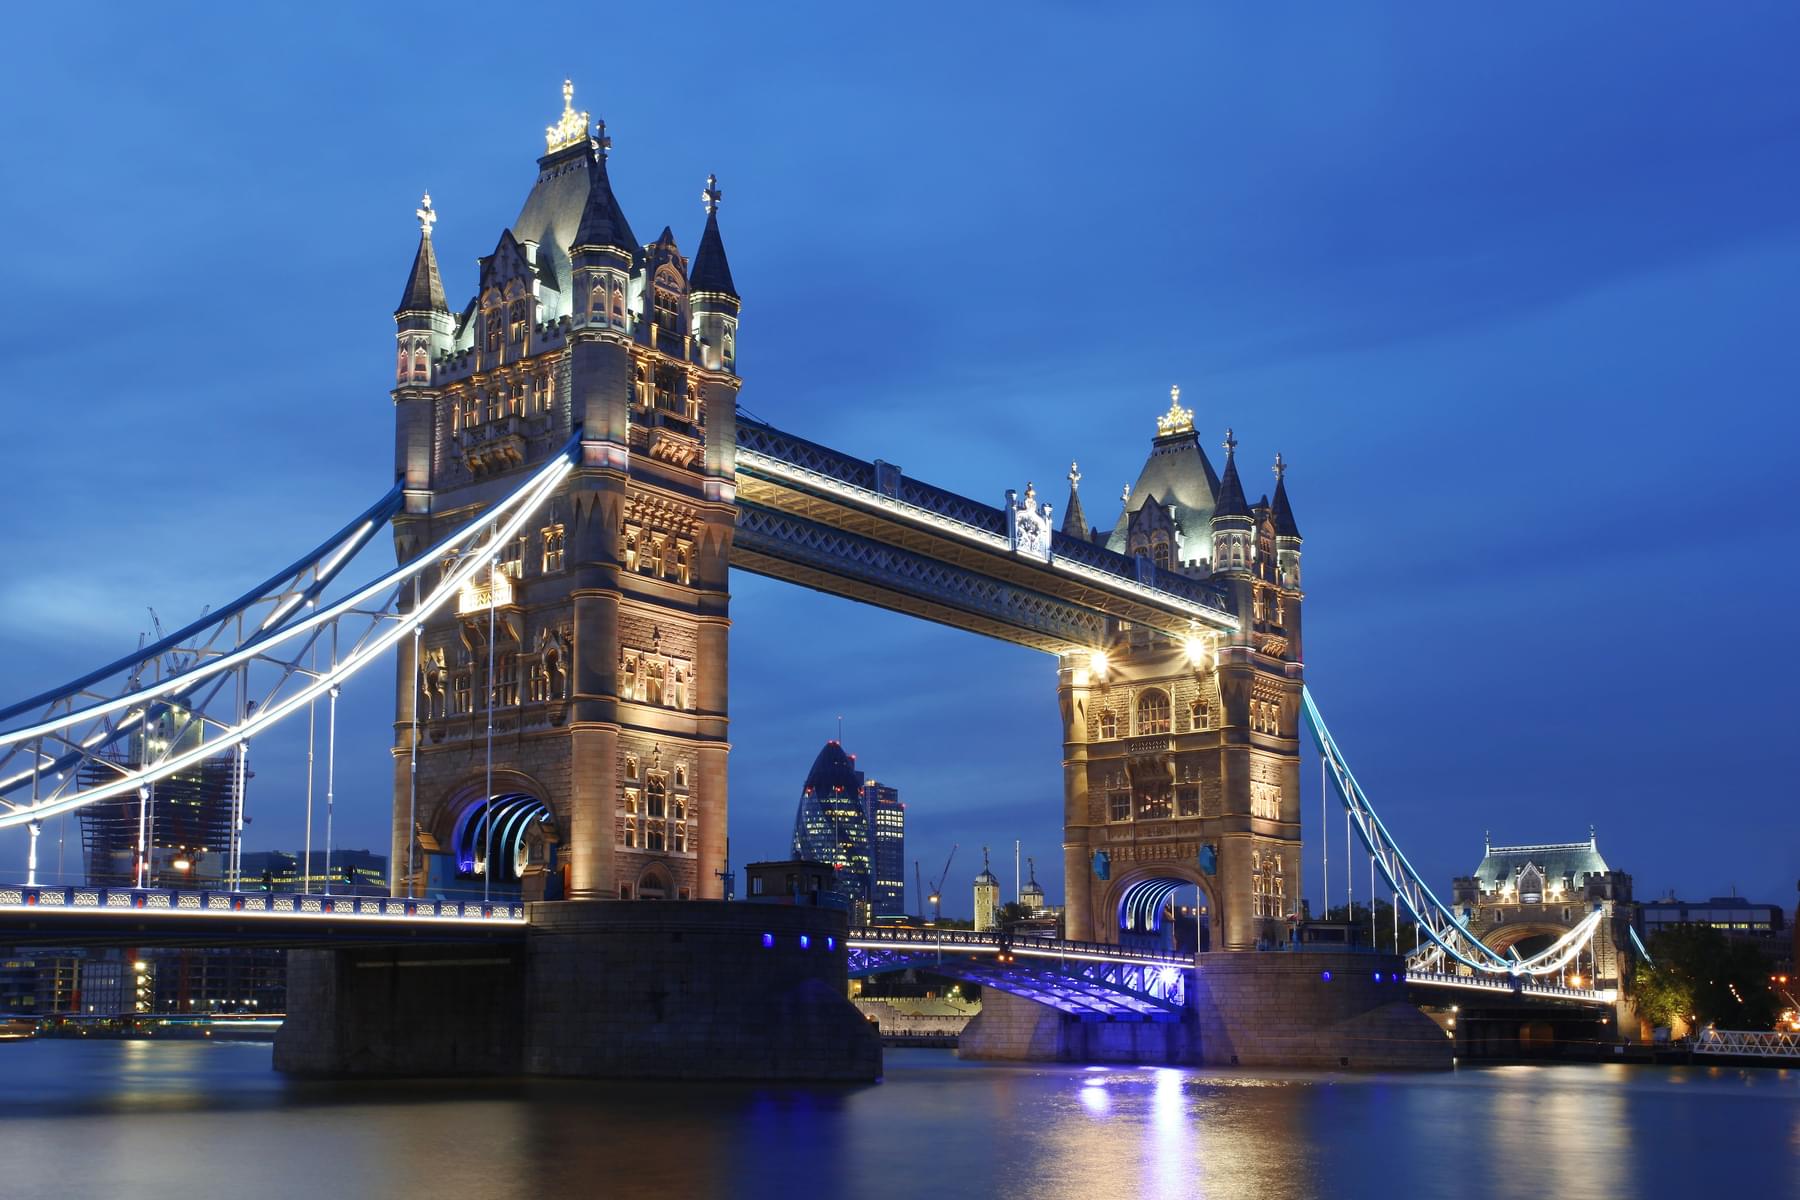 Why Visit Tower Bridge London?